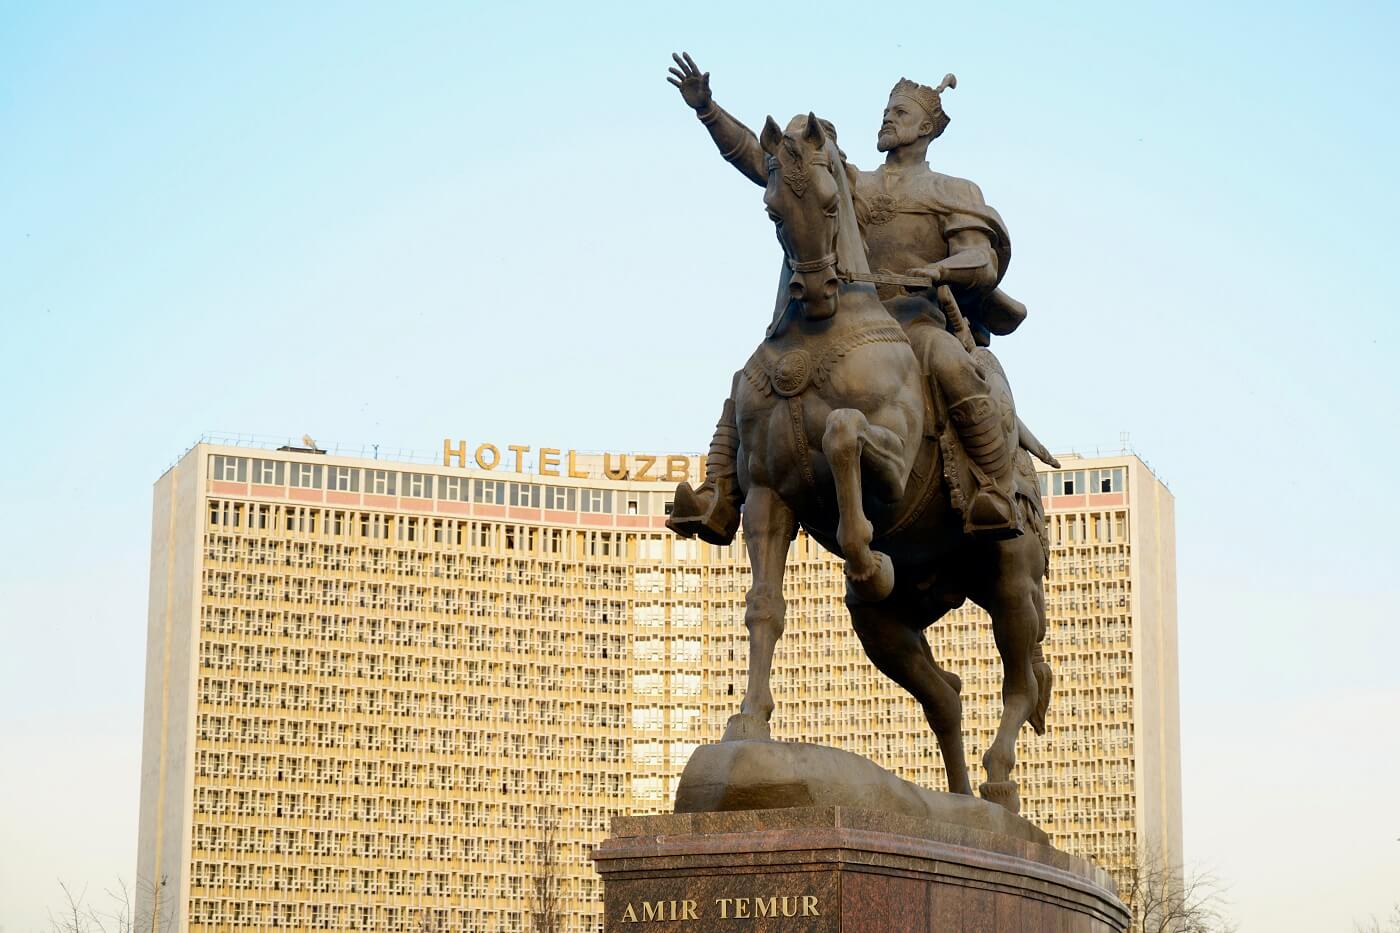 Tashkent Amir Timur statue on the main square